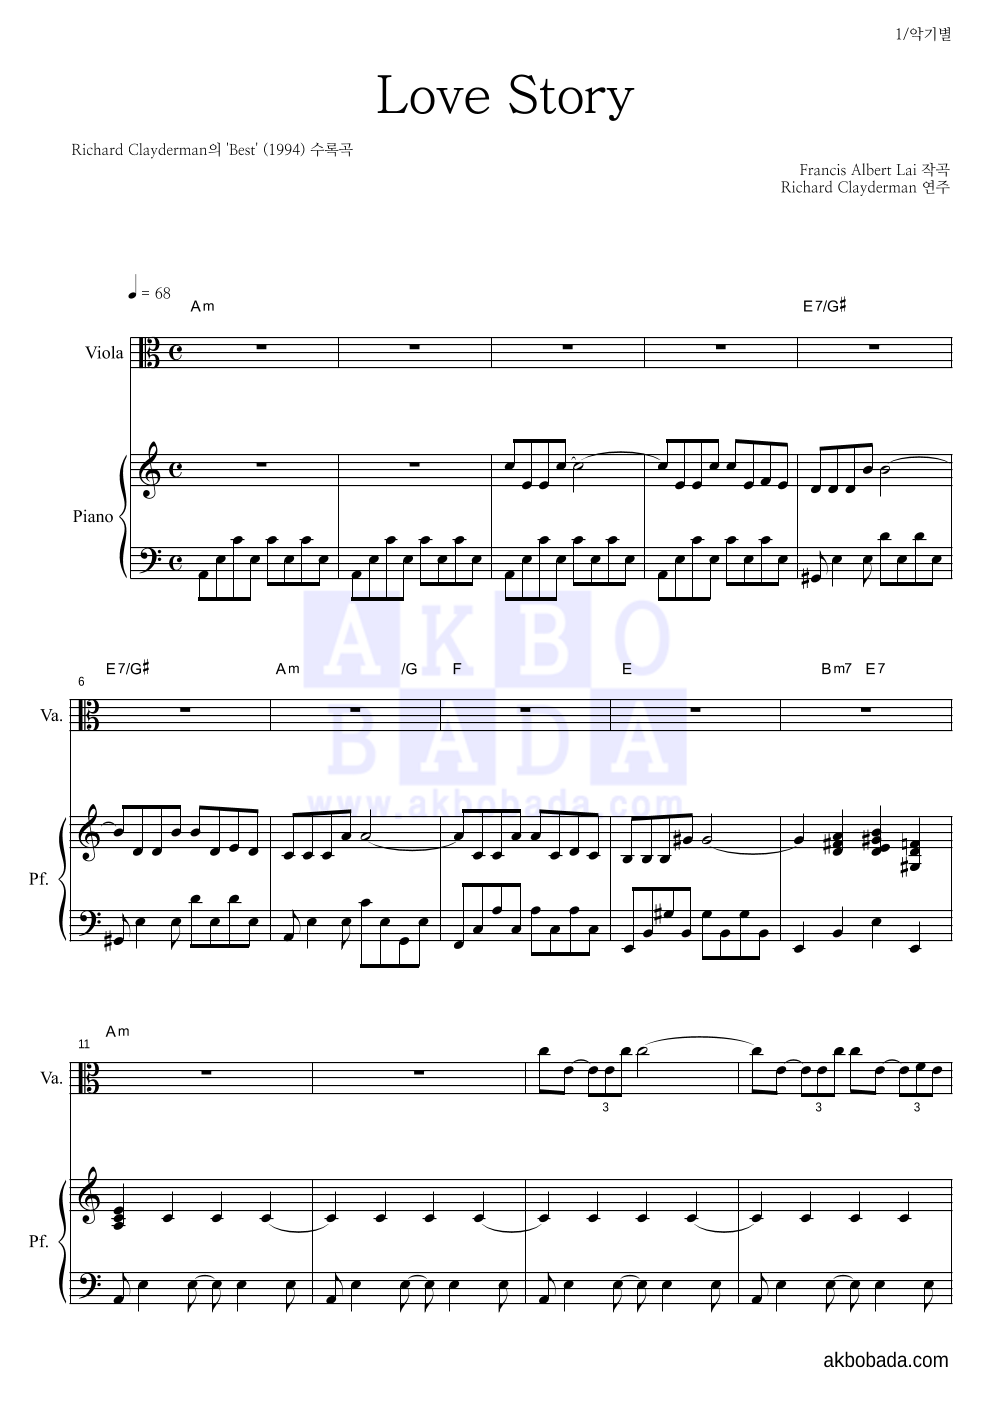 Richard Clayderman  - Love Story 비올라&피아노 악보 